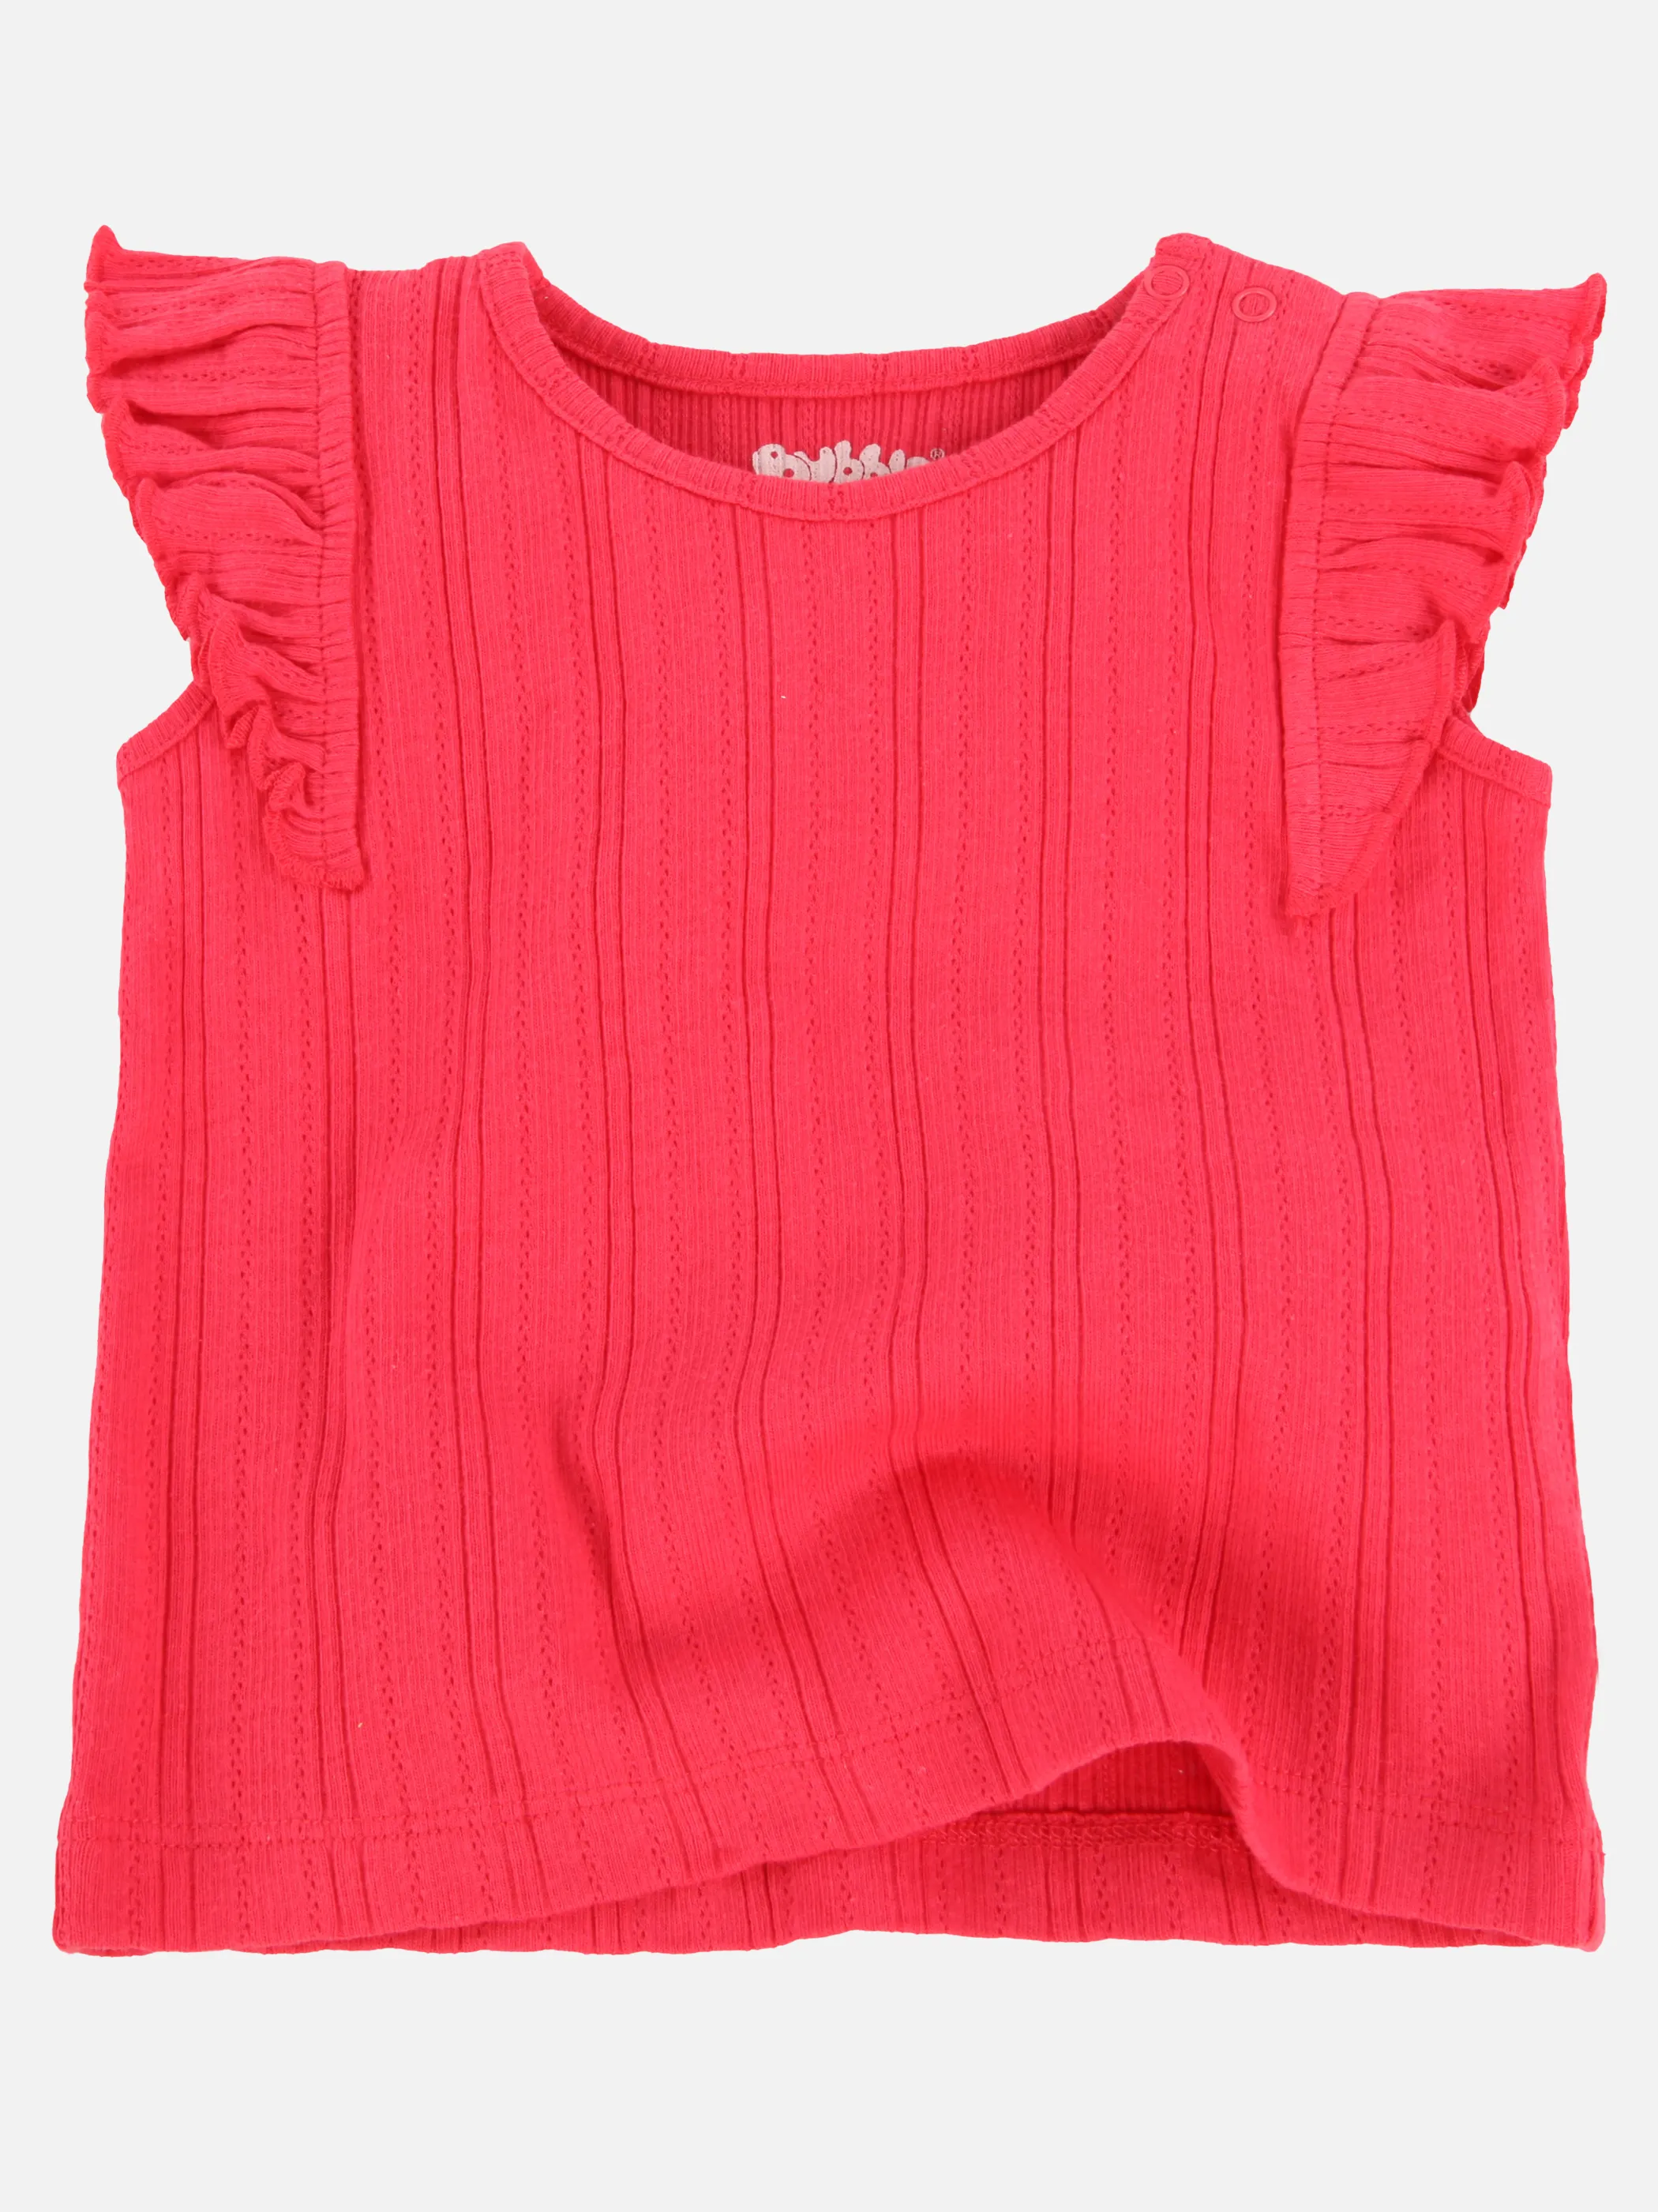 Bubble Gum BM T-Shirt mit Flügelärmel in uni rot Rot 890856 ROT 1